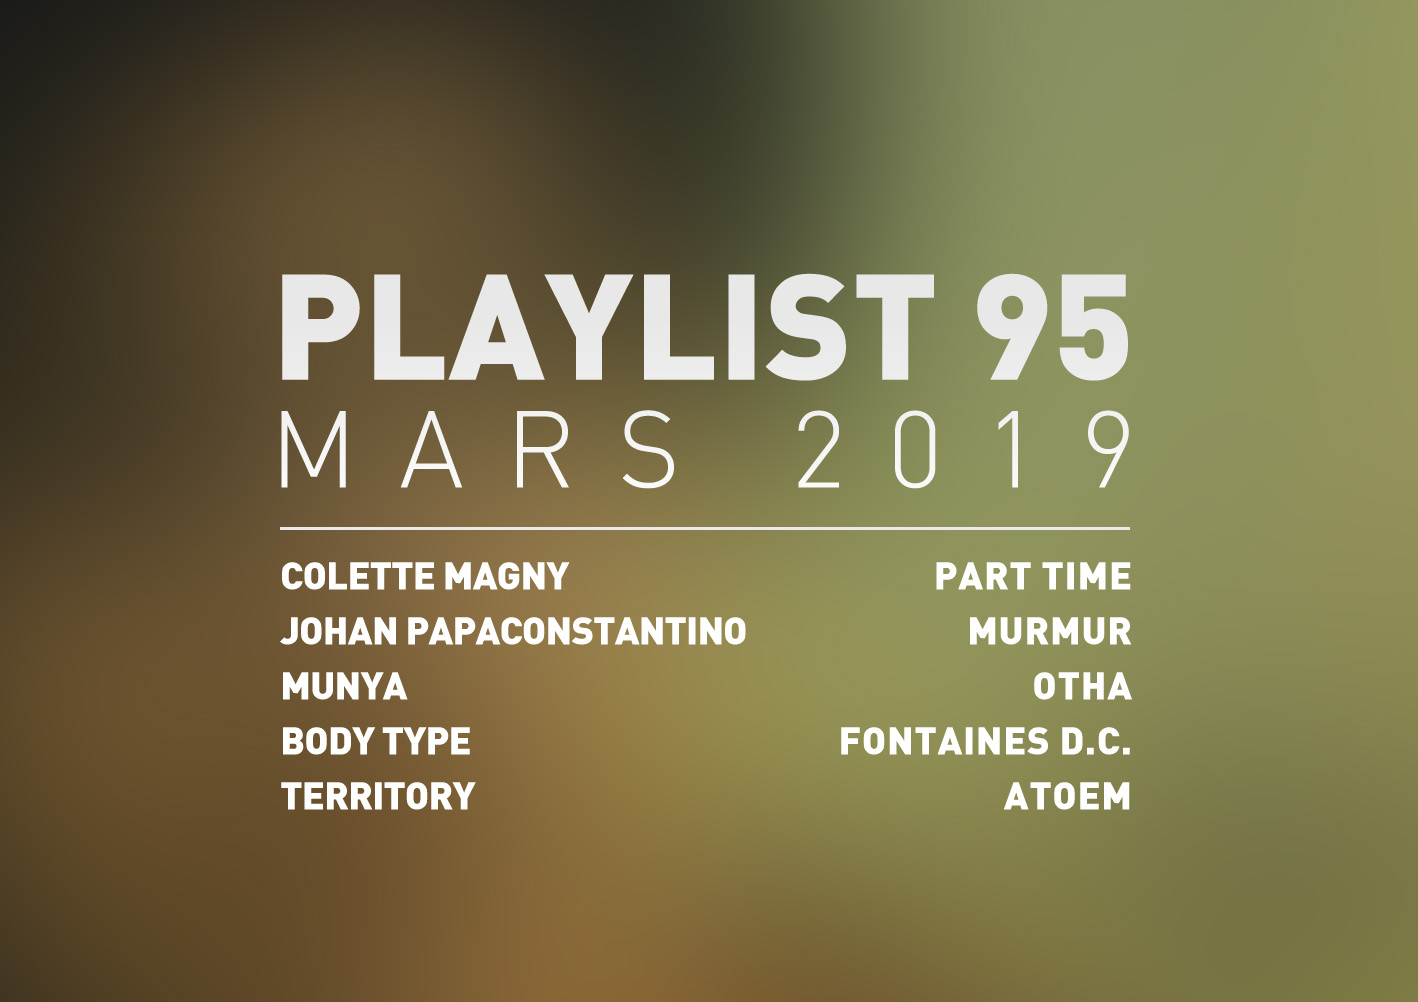 Playlist 95 : Colette Magny, Johan Papaconstantino, FONTAINES D.C., ATOEM, etc